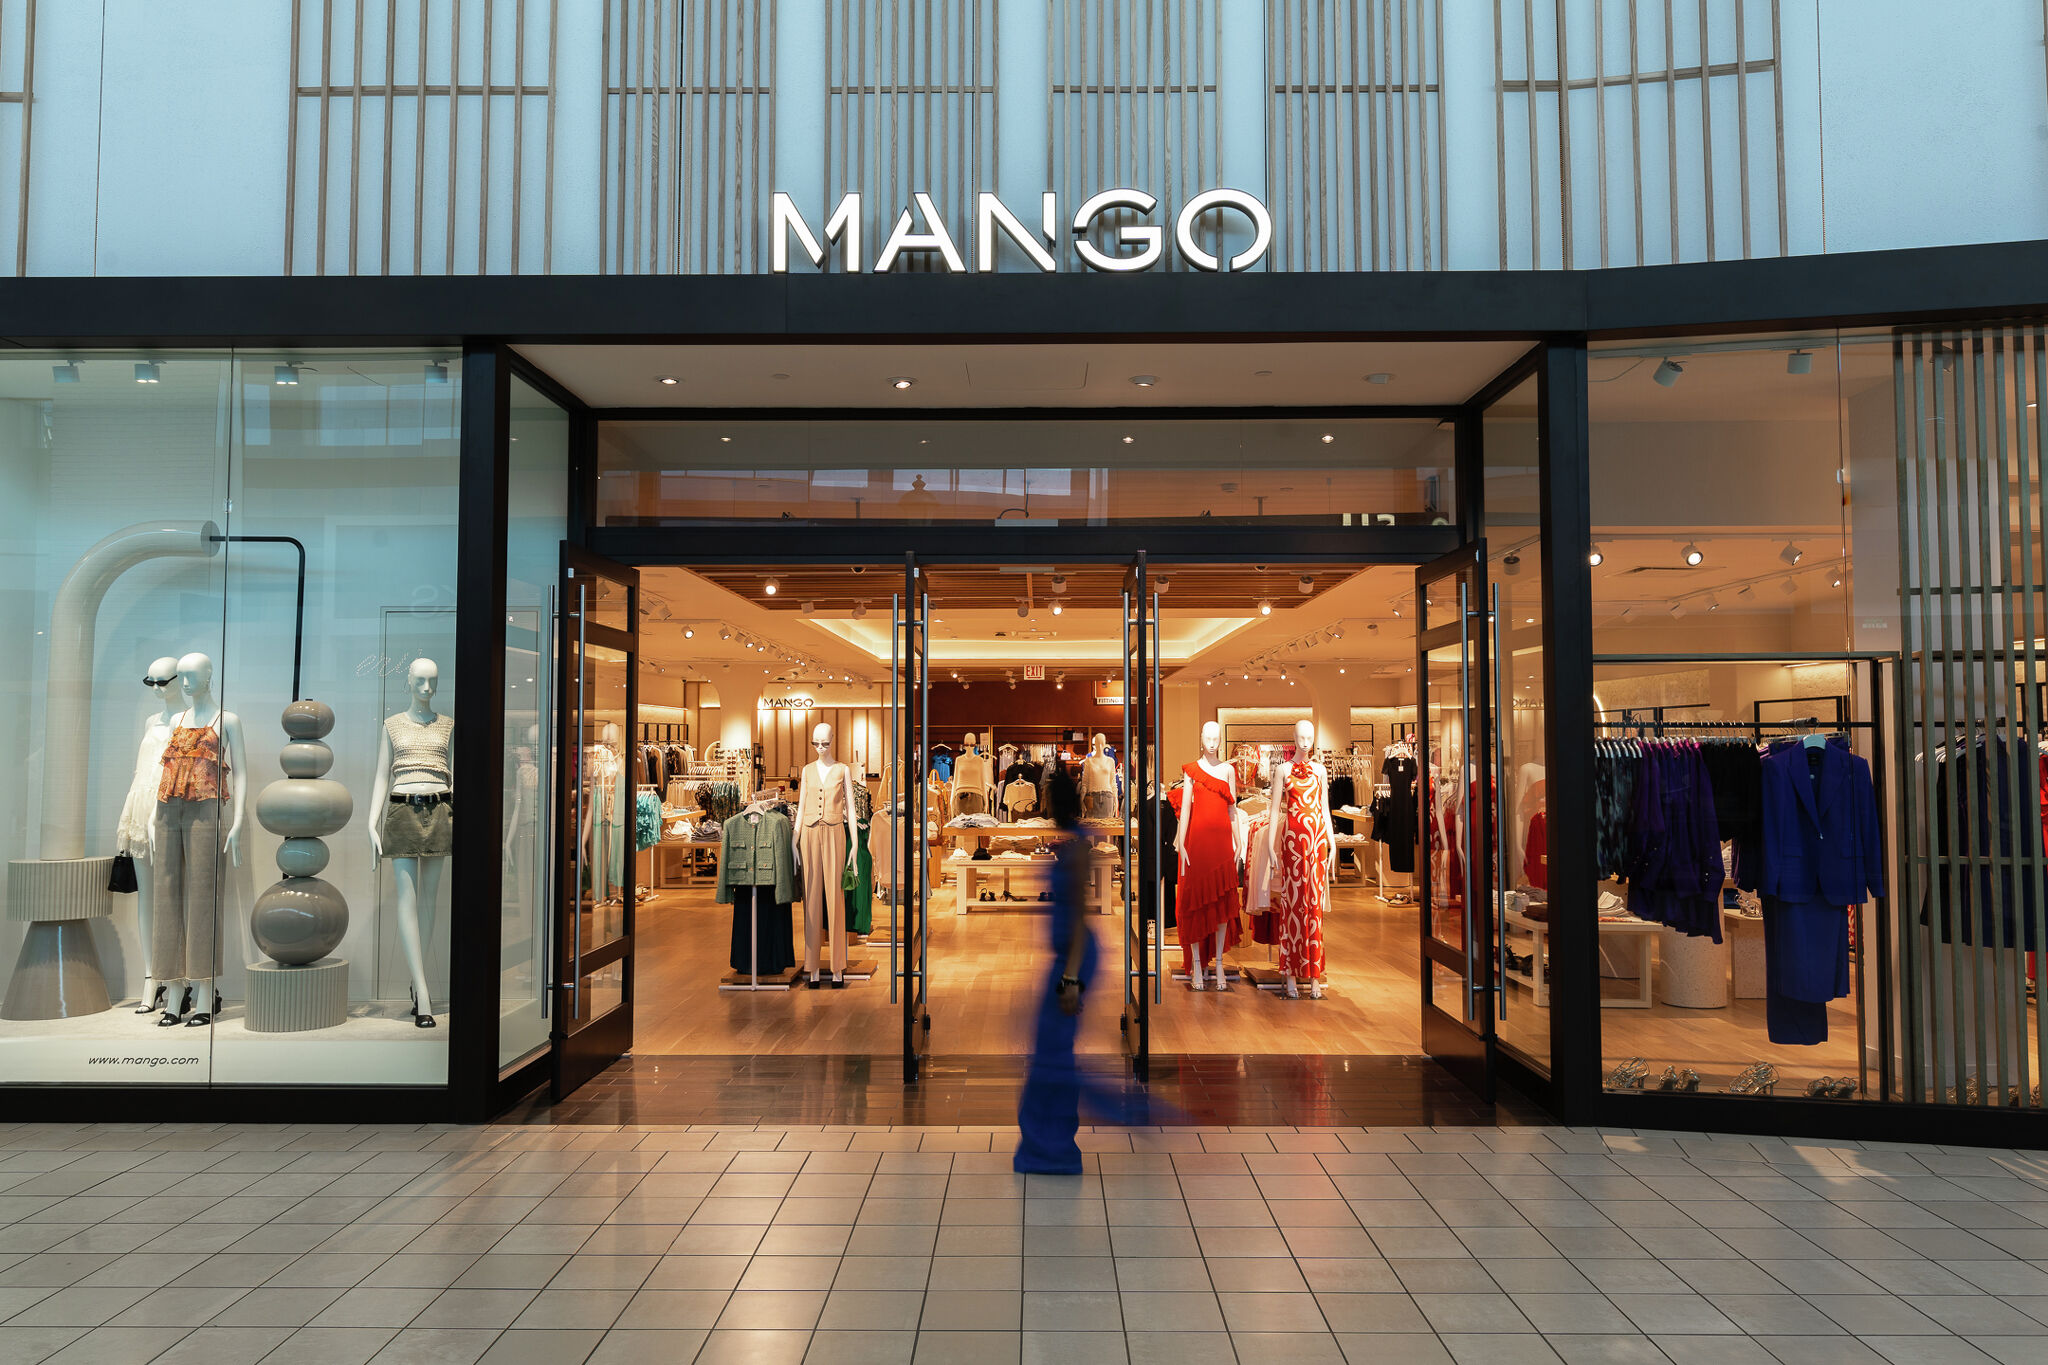 Houston mall lands Mango Spanish store, brand's first Texas location